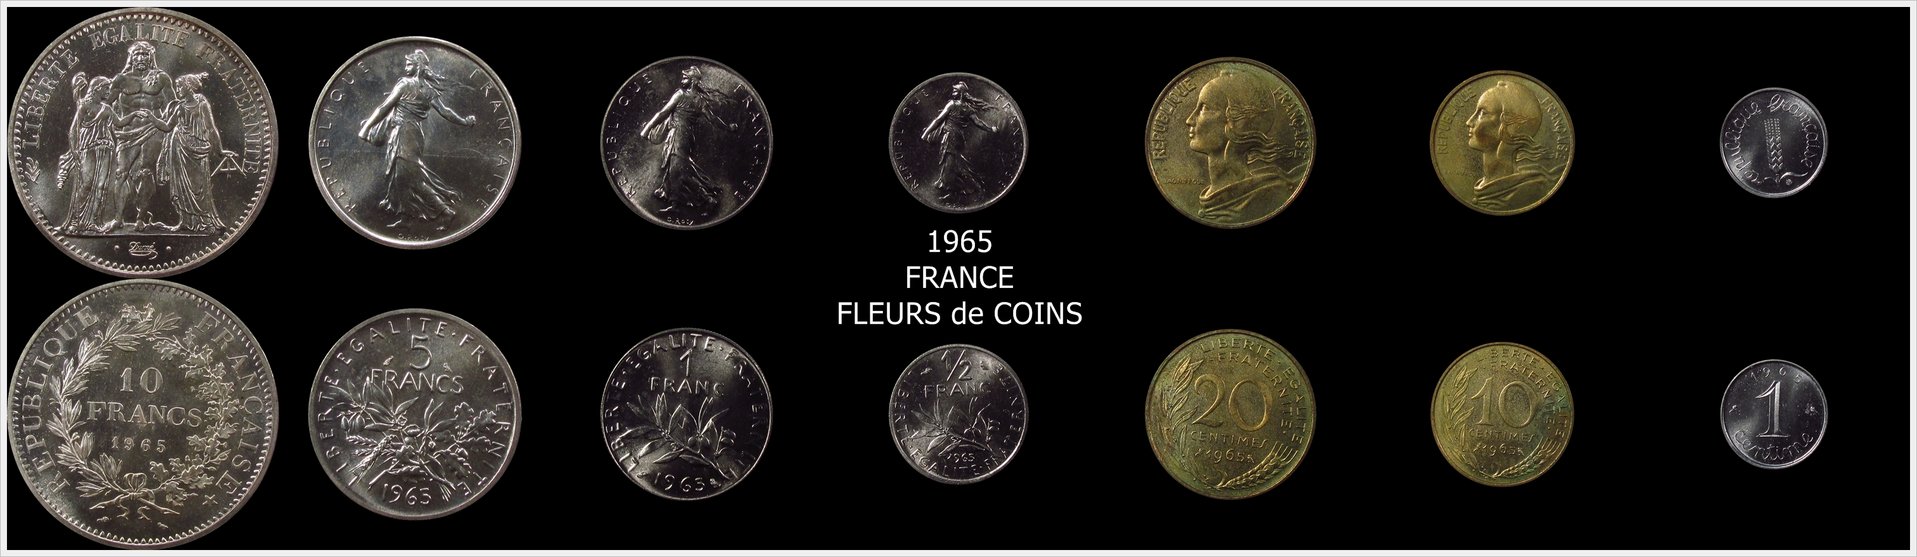 1965 France Fleurs de Coins.jpg